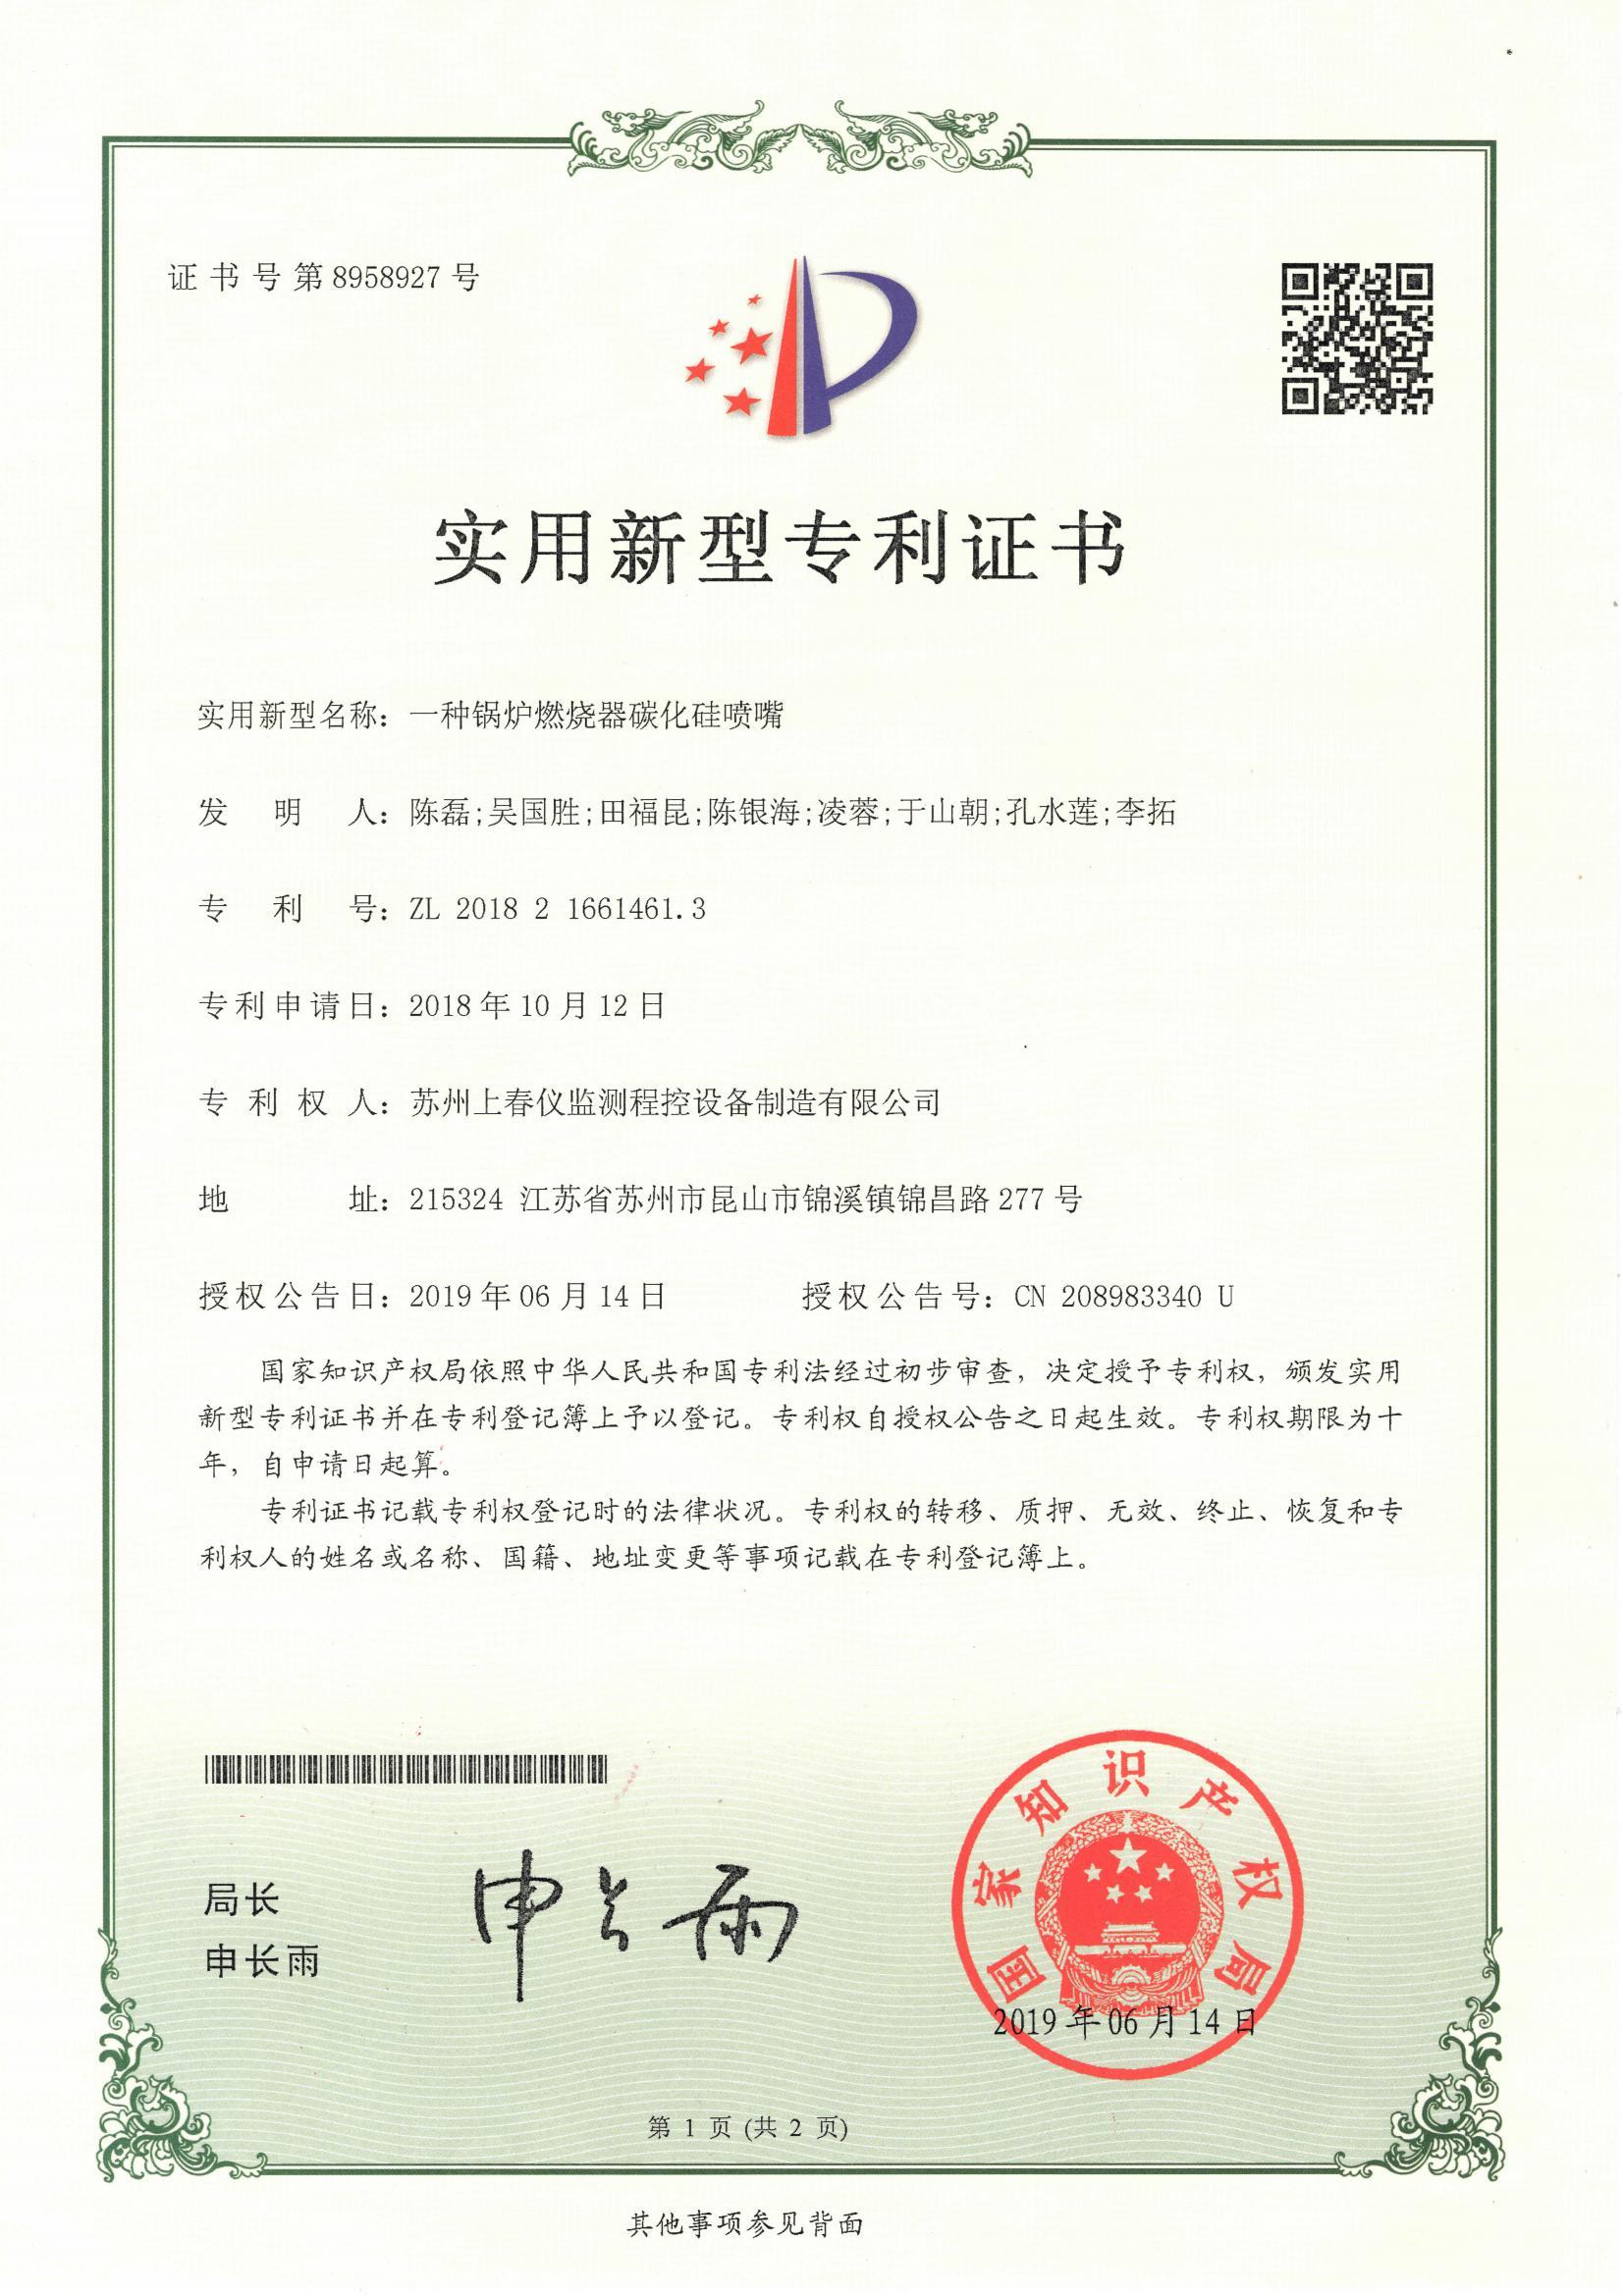 A Burner Nozzle Patent Certificate